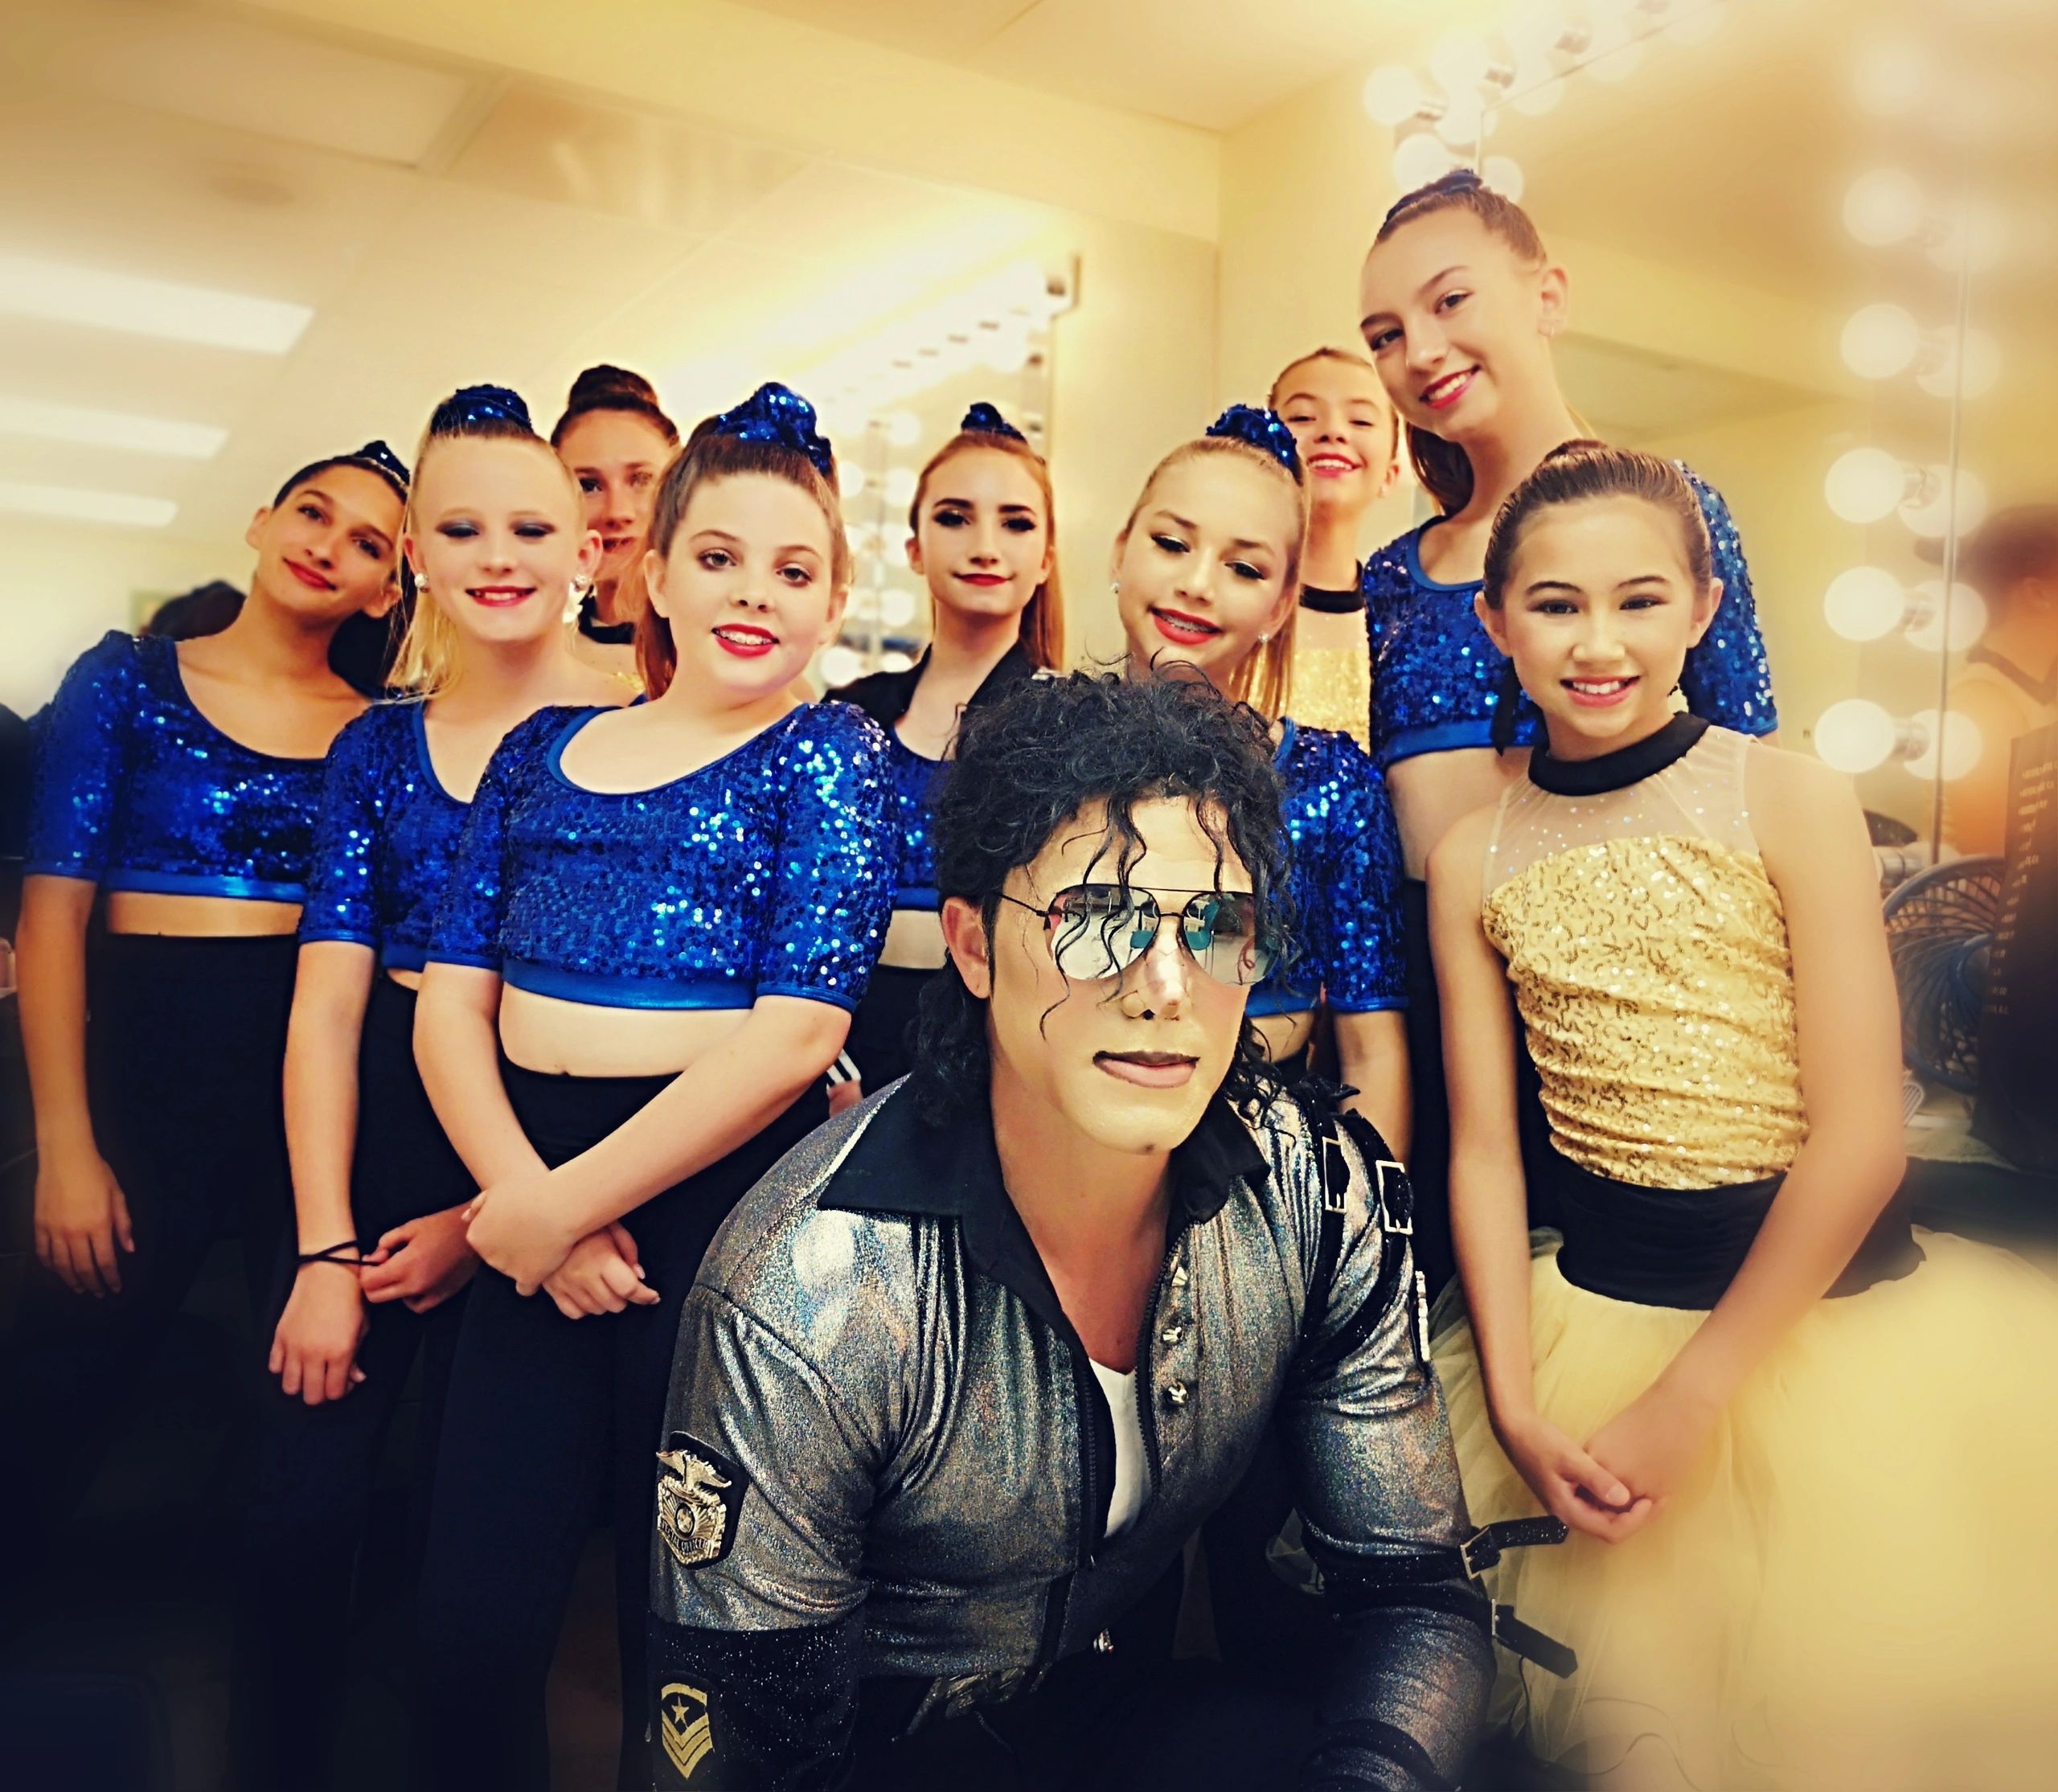 Michael Jackson Tribute J Lucas opens children's dance recital in Florida as a special appearance